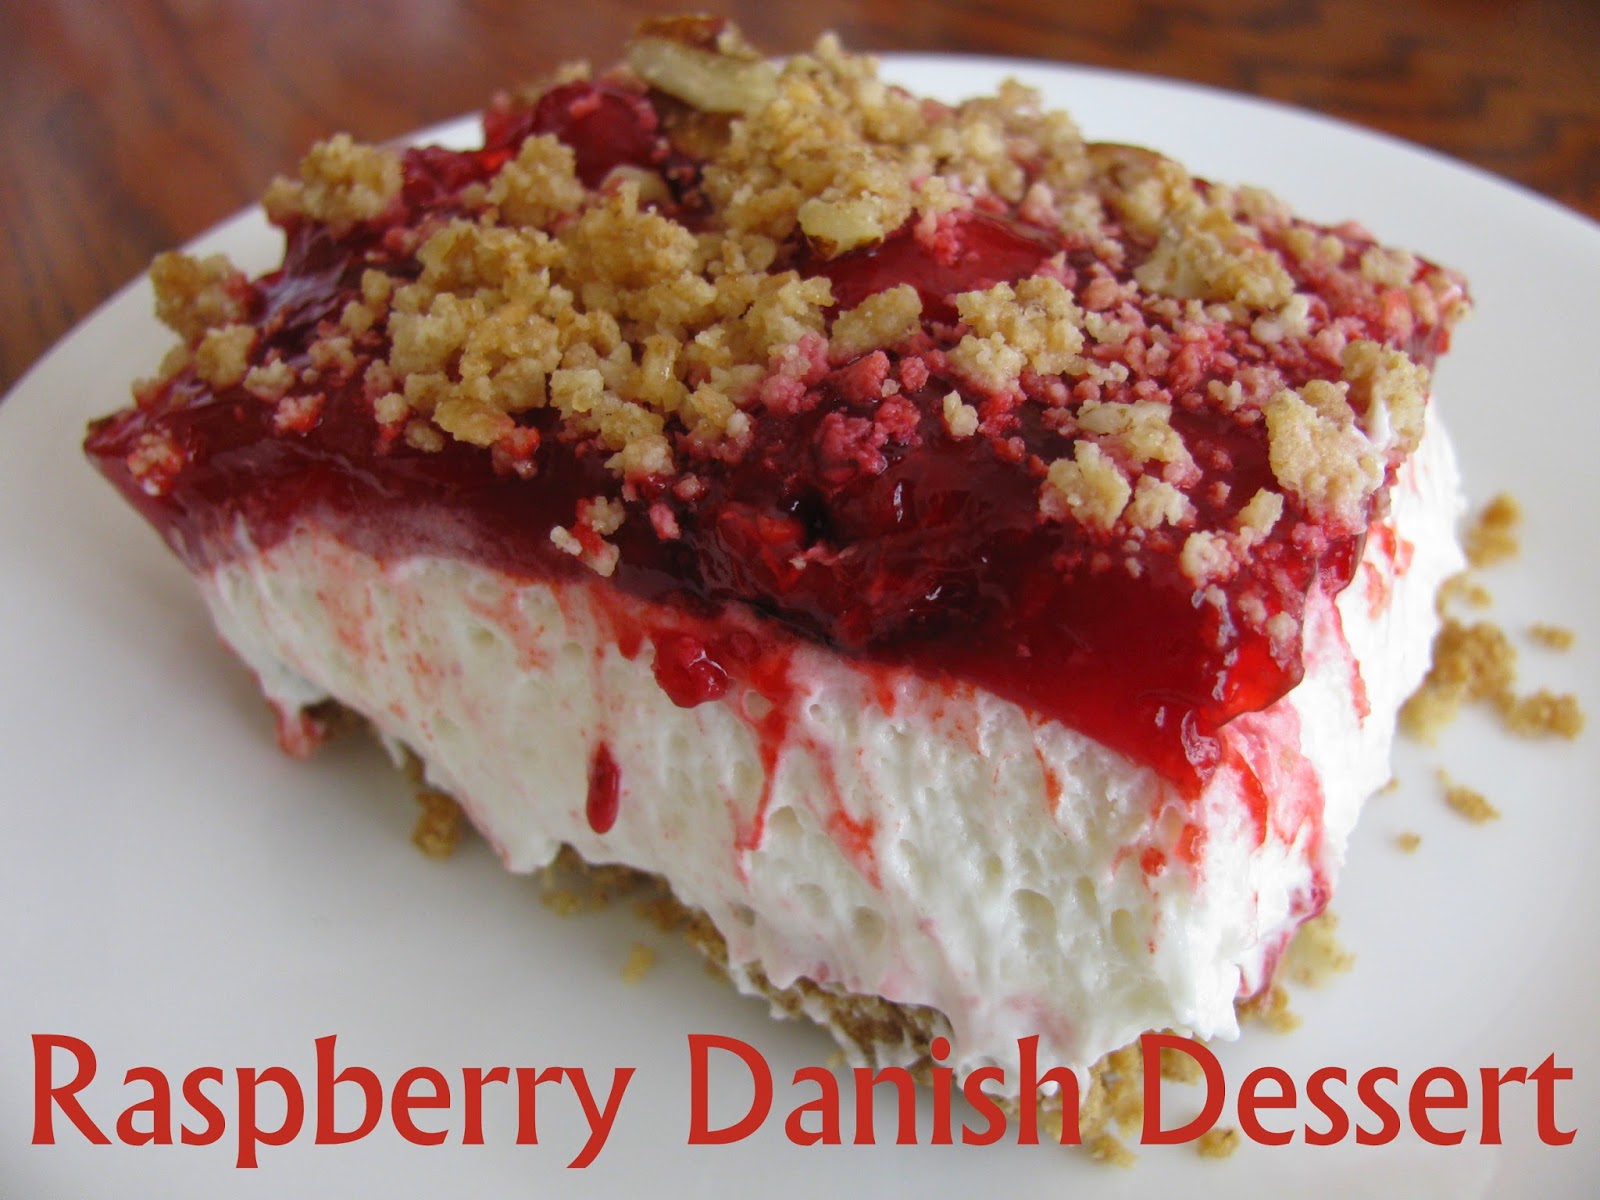 Raspberry Danish Dessert Recipe – Raspberry